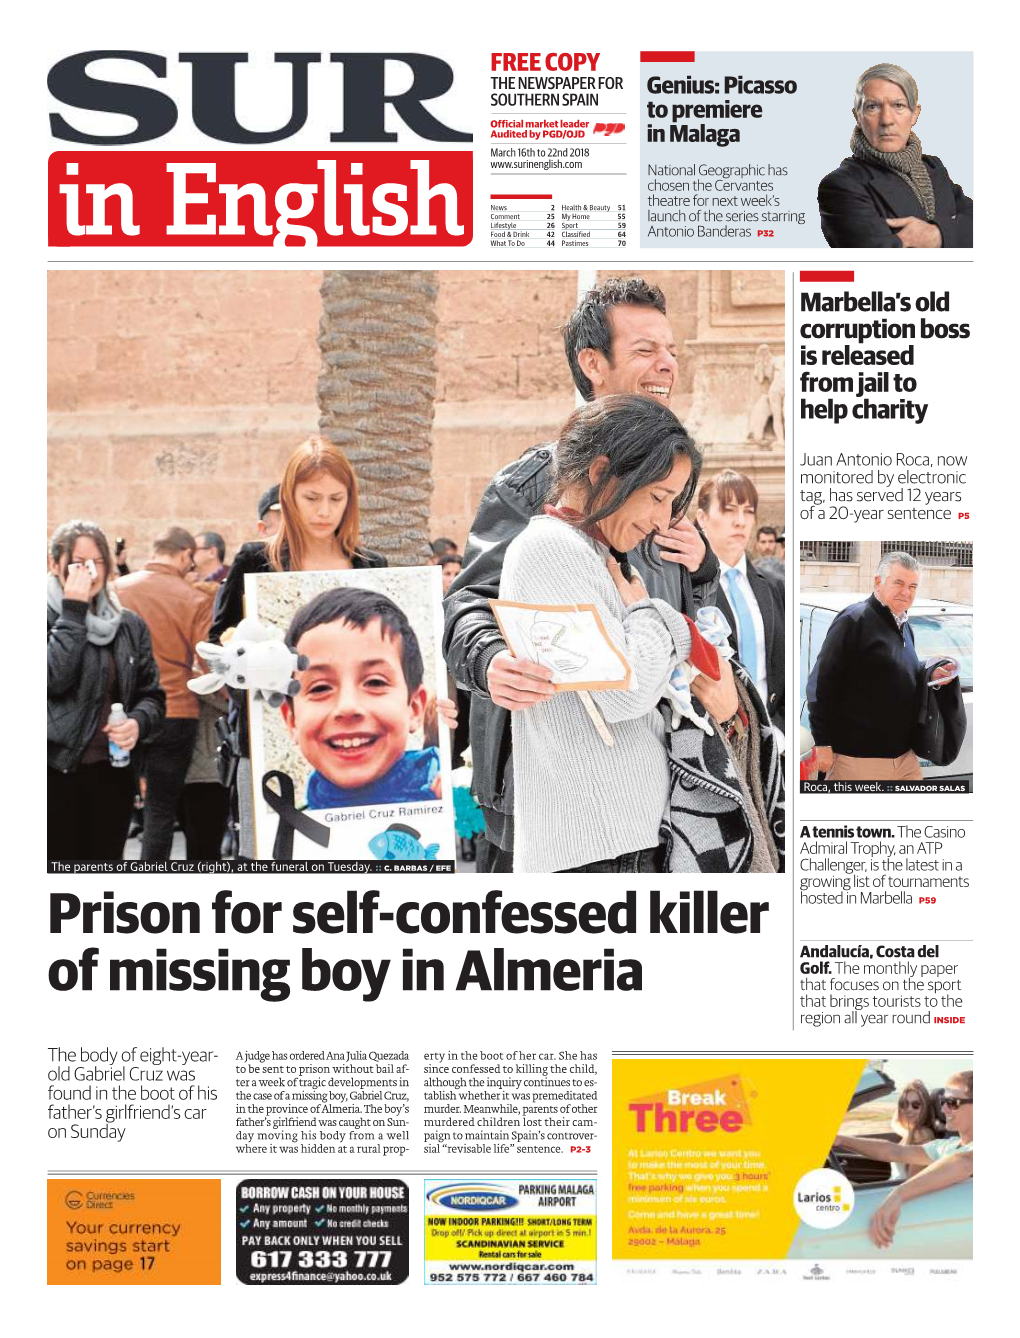 Prison for Self-Confessed Killer of Missing Boy in Almeria